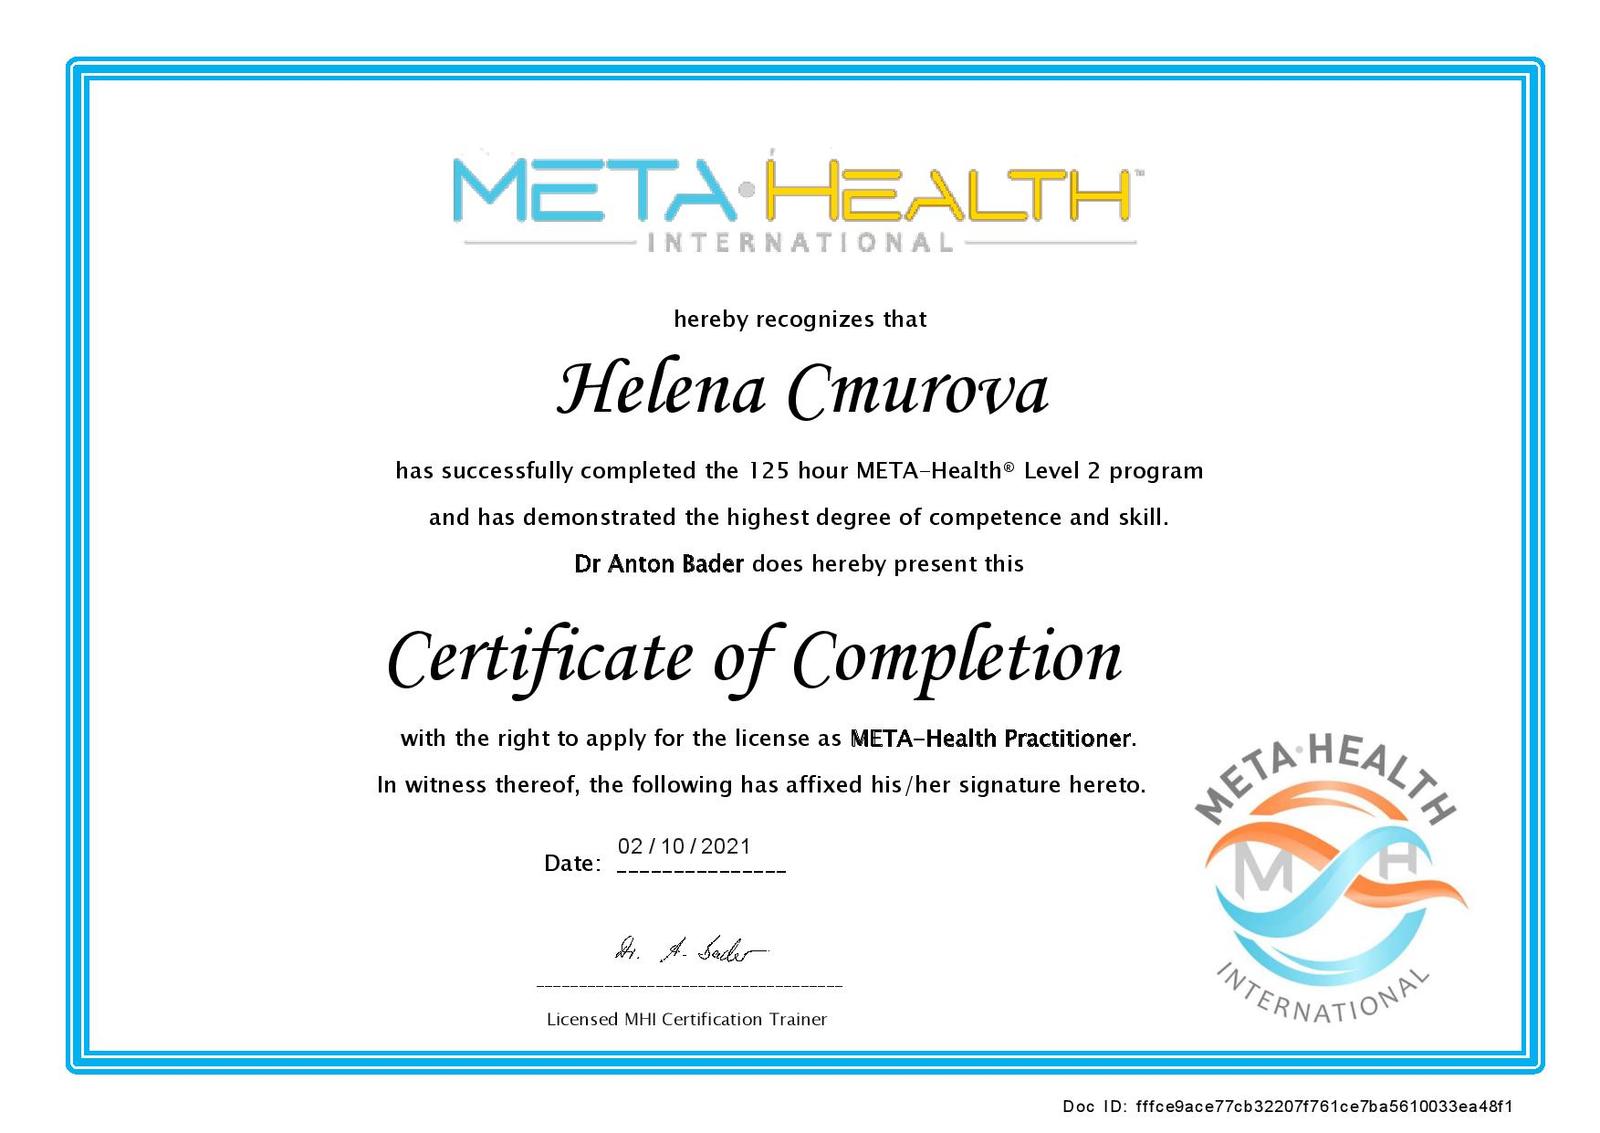 Dr. Hamer - Helena_Cmurova_Certificate Metha Health-page-001.jpg